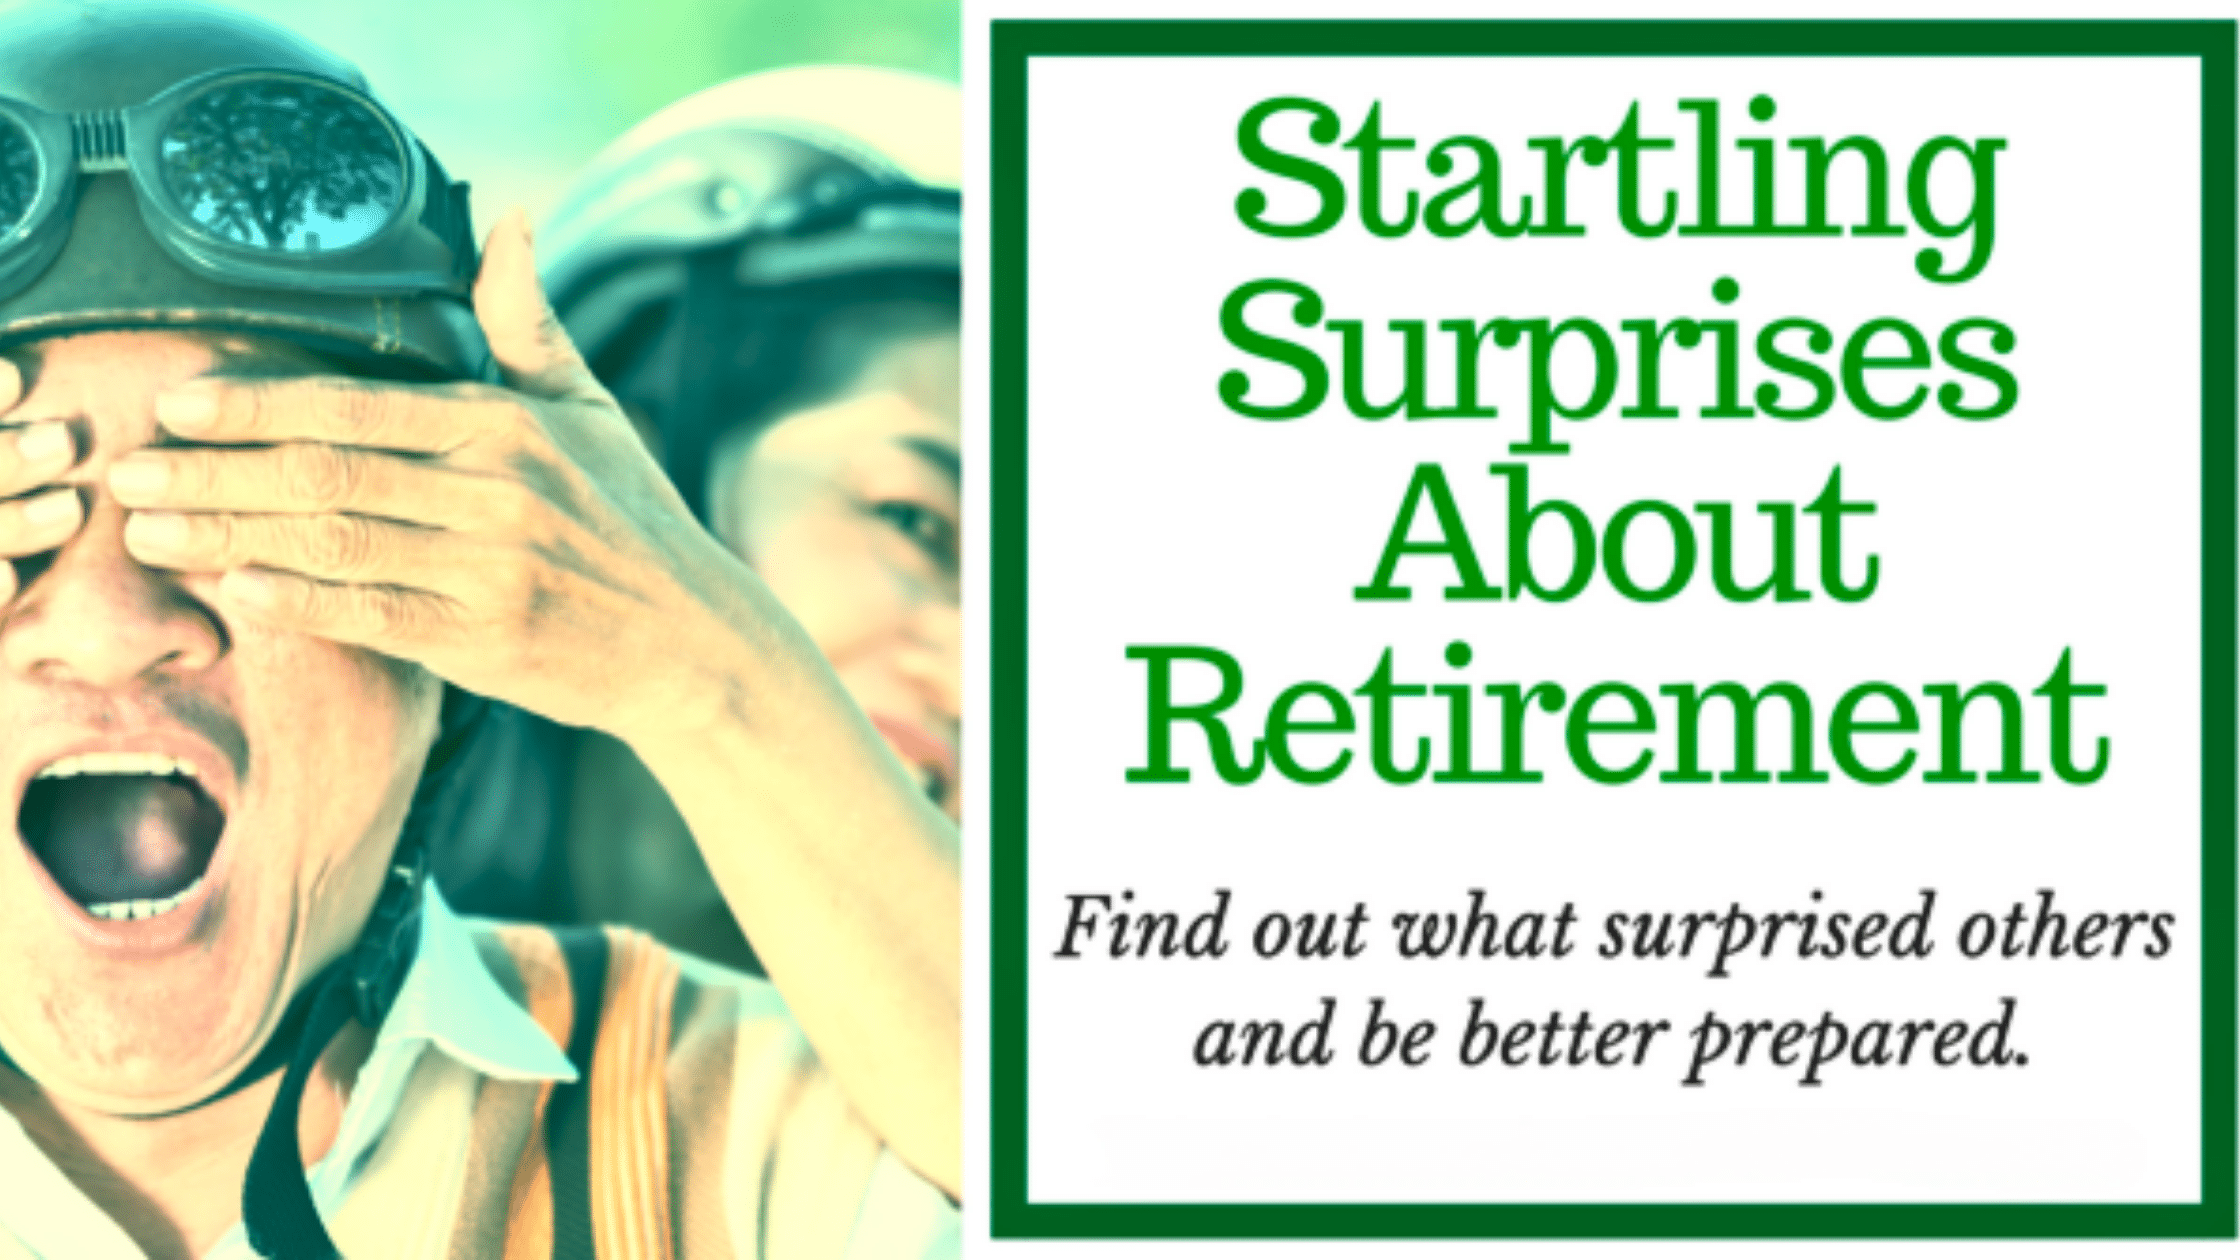 Startling Surprises About Retirement